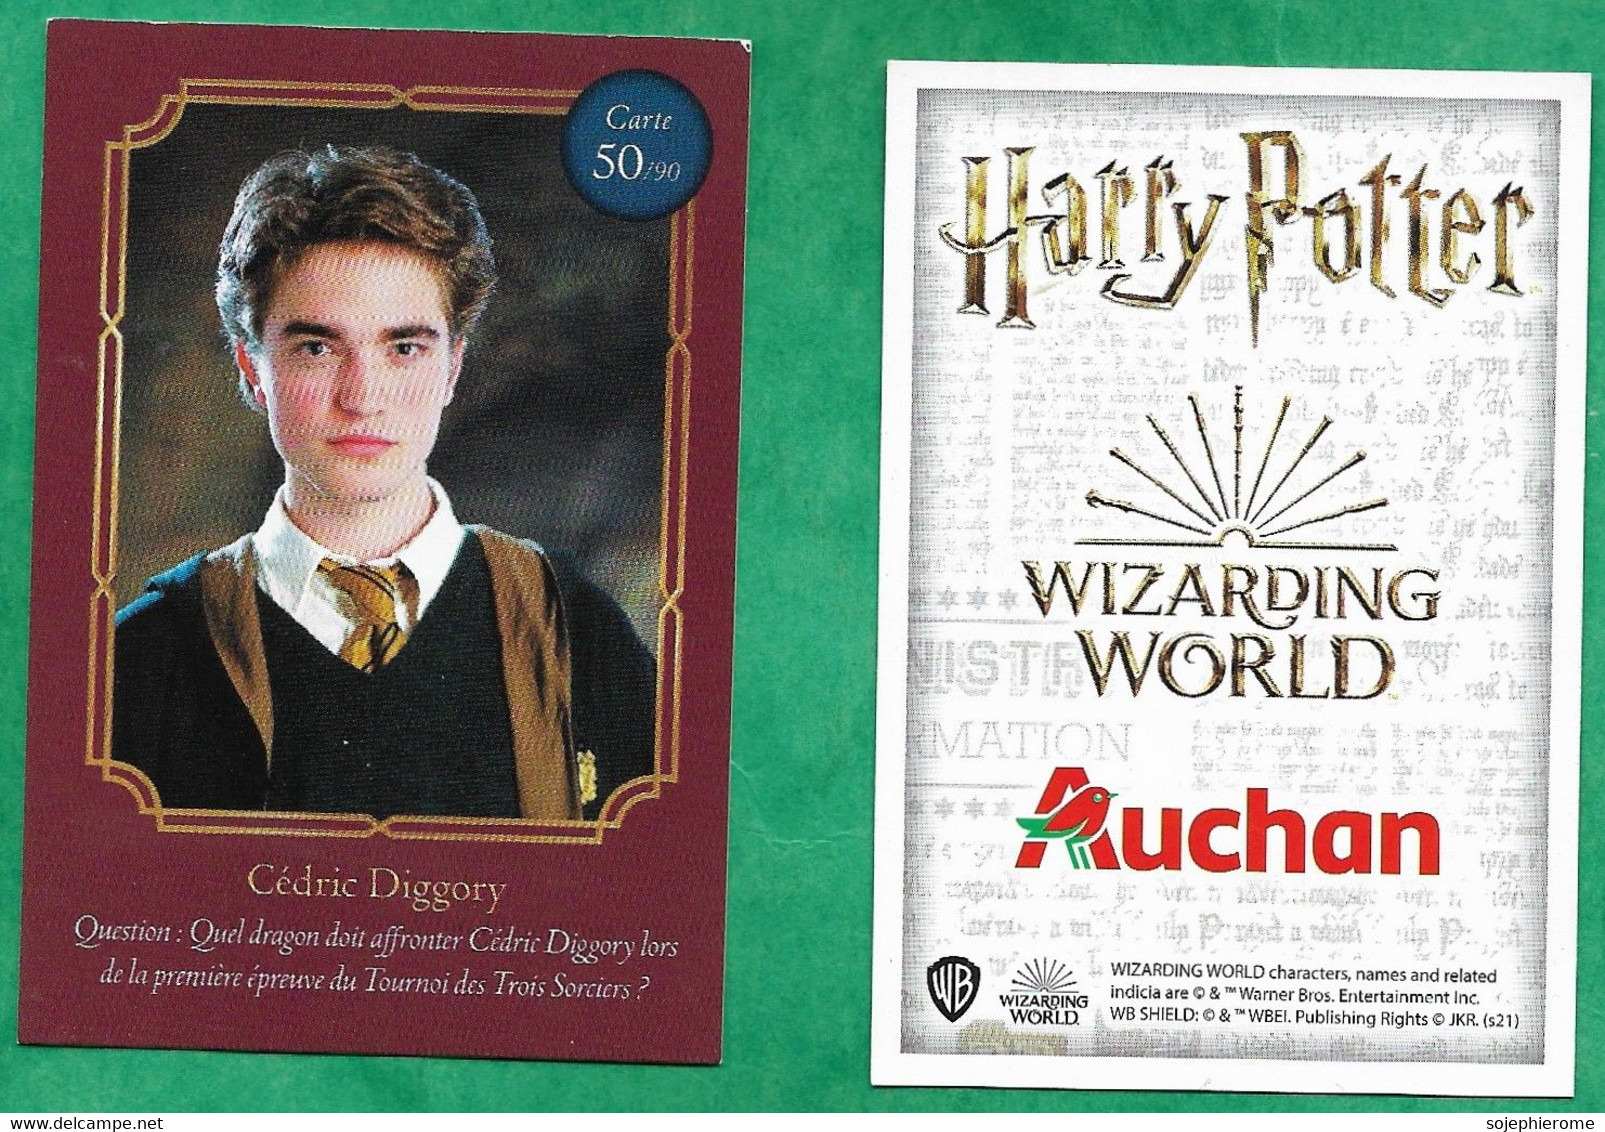 Auchan "Harry Potter Wizarding World" Cédric Diggory 50/90 - 2scans - Harry Potter